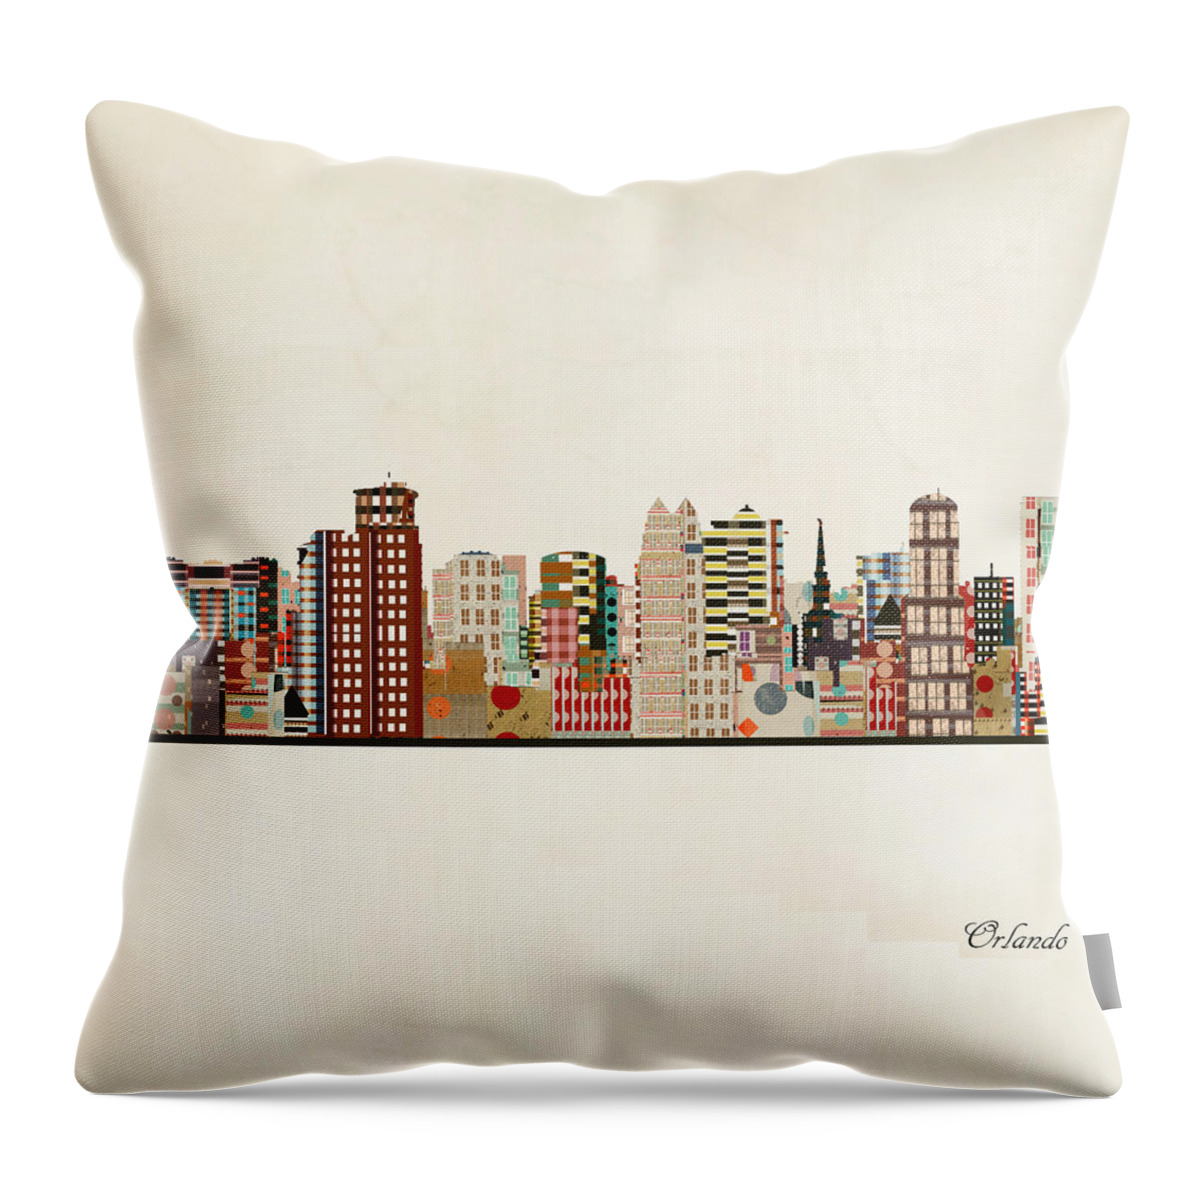 Orlando Throw Pillow featuring the painting Orlando Skyline #1 by Bri Buckley